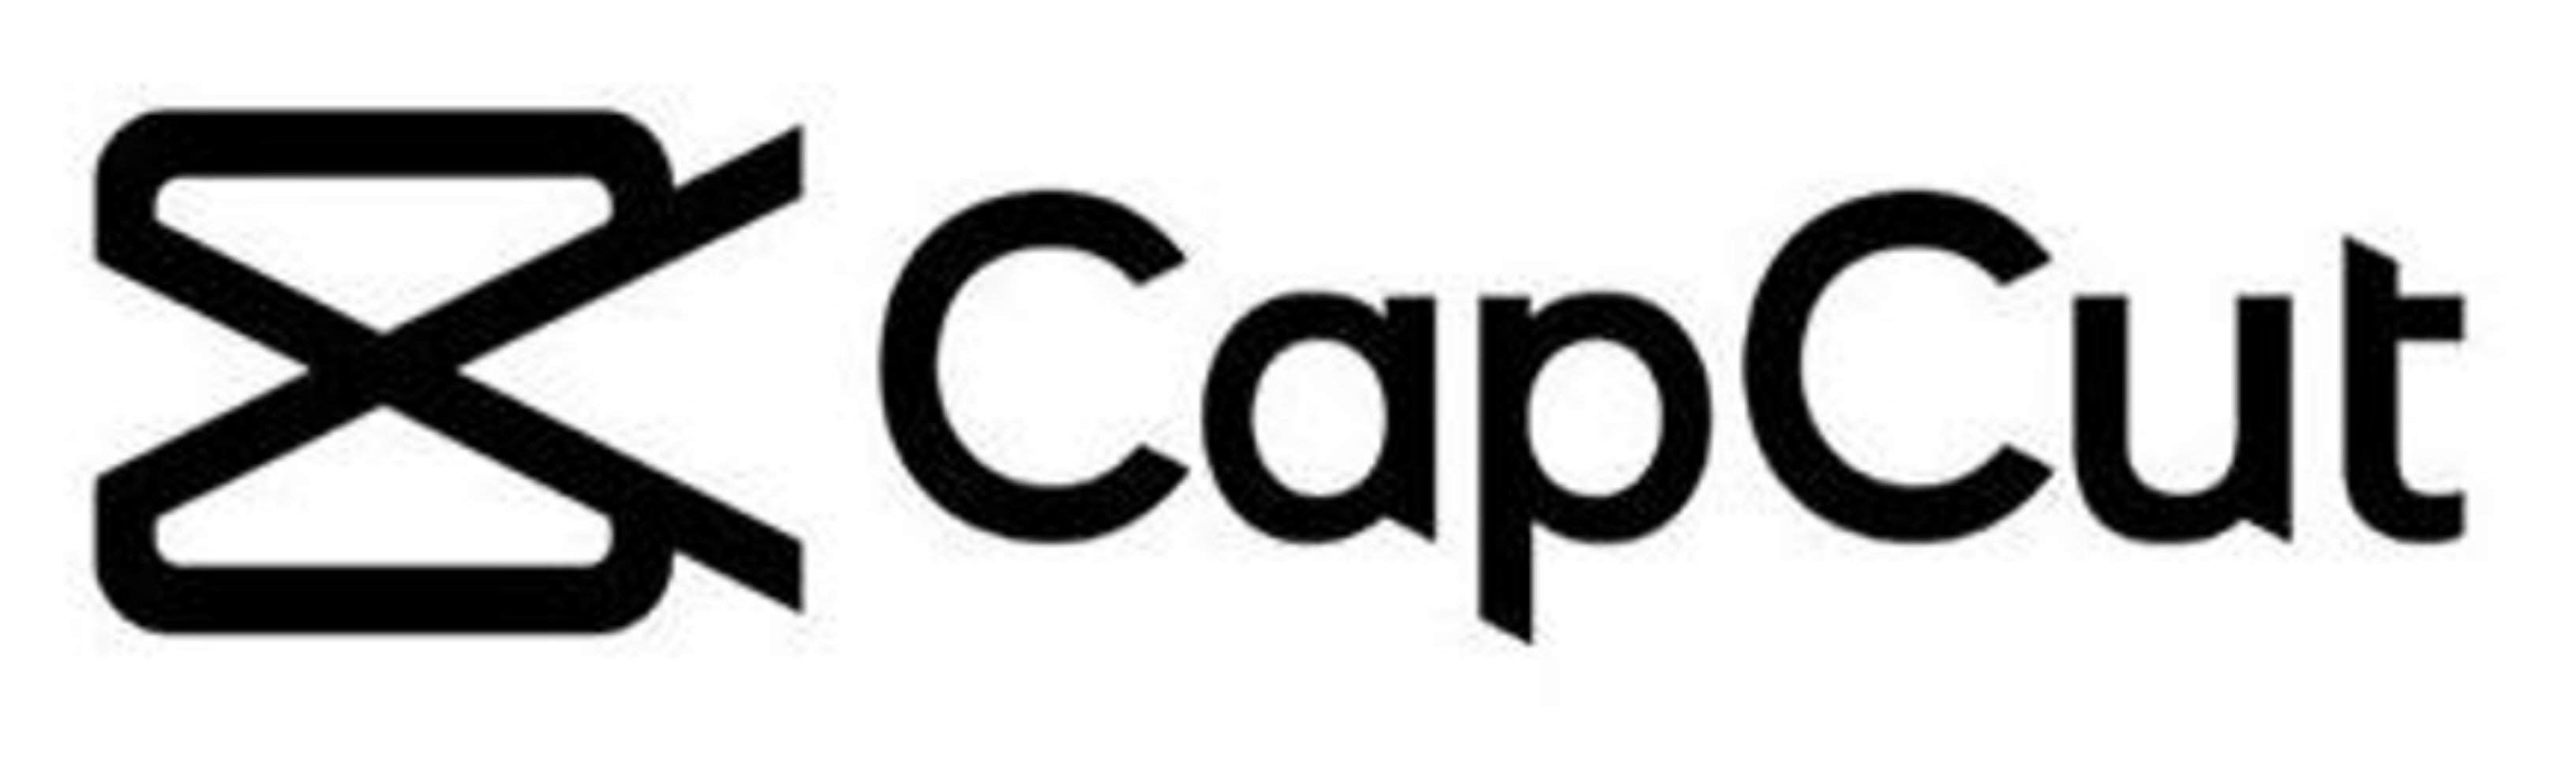 Open eyes capcut. CAPCUT logo. CAPCUT лого. Значок CAPCUT на прозрачном фоне. CAPCUT без фона.